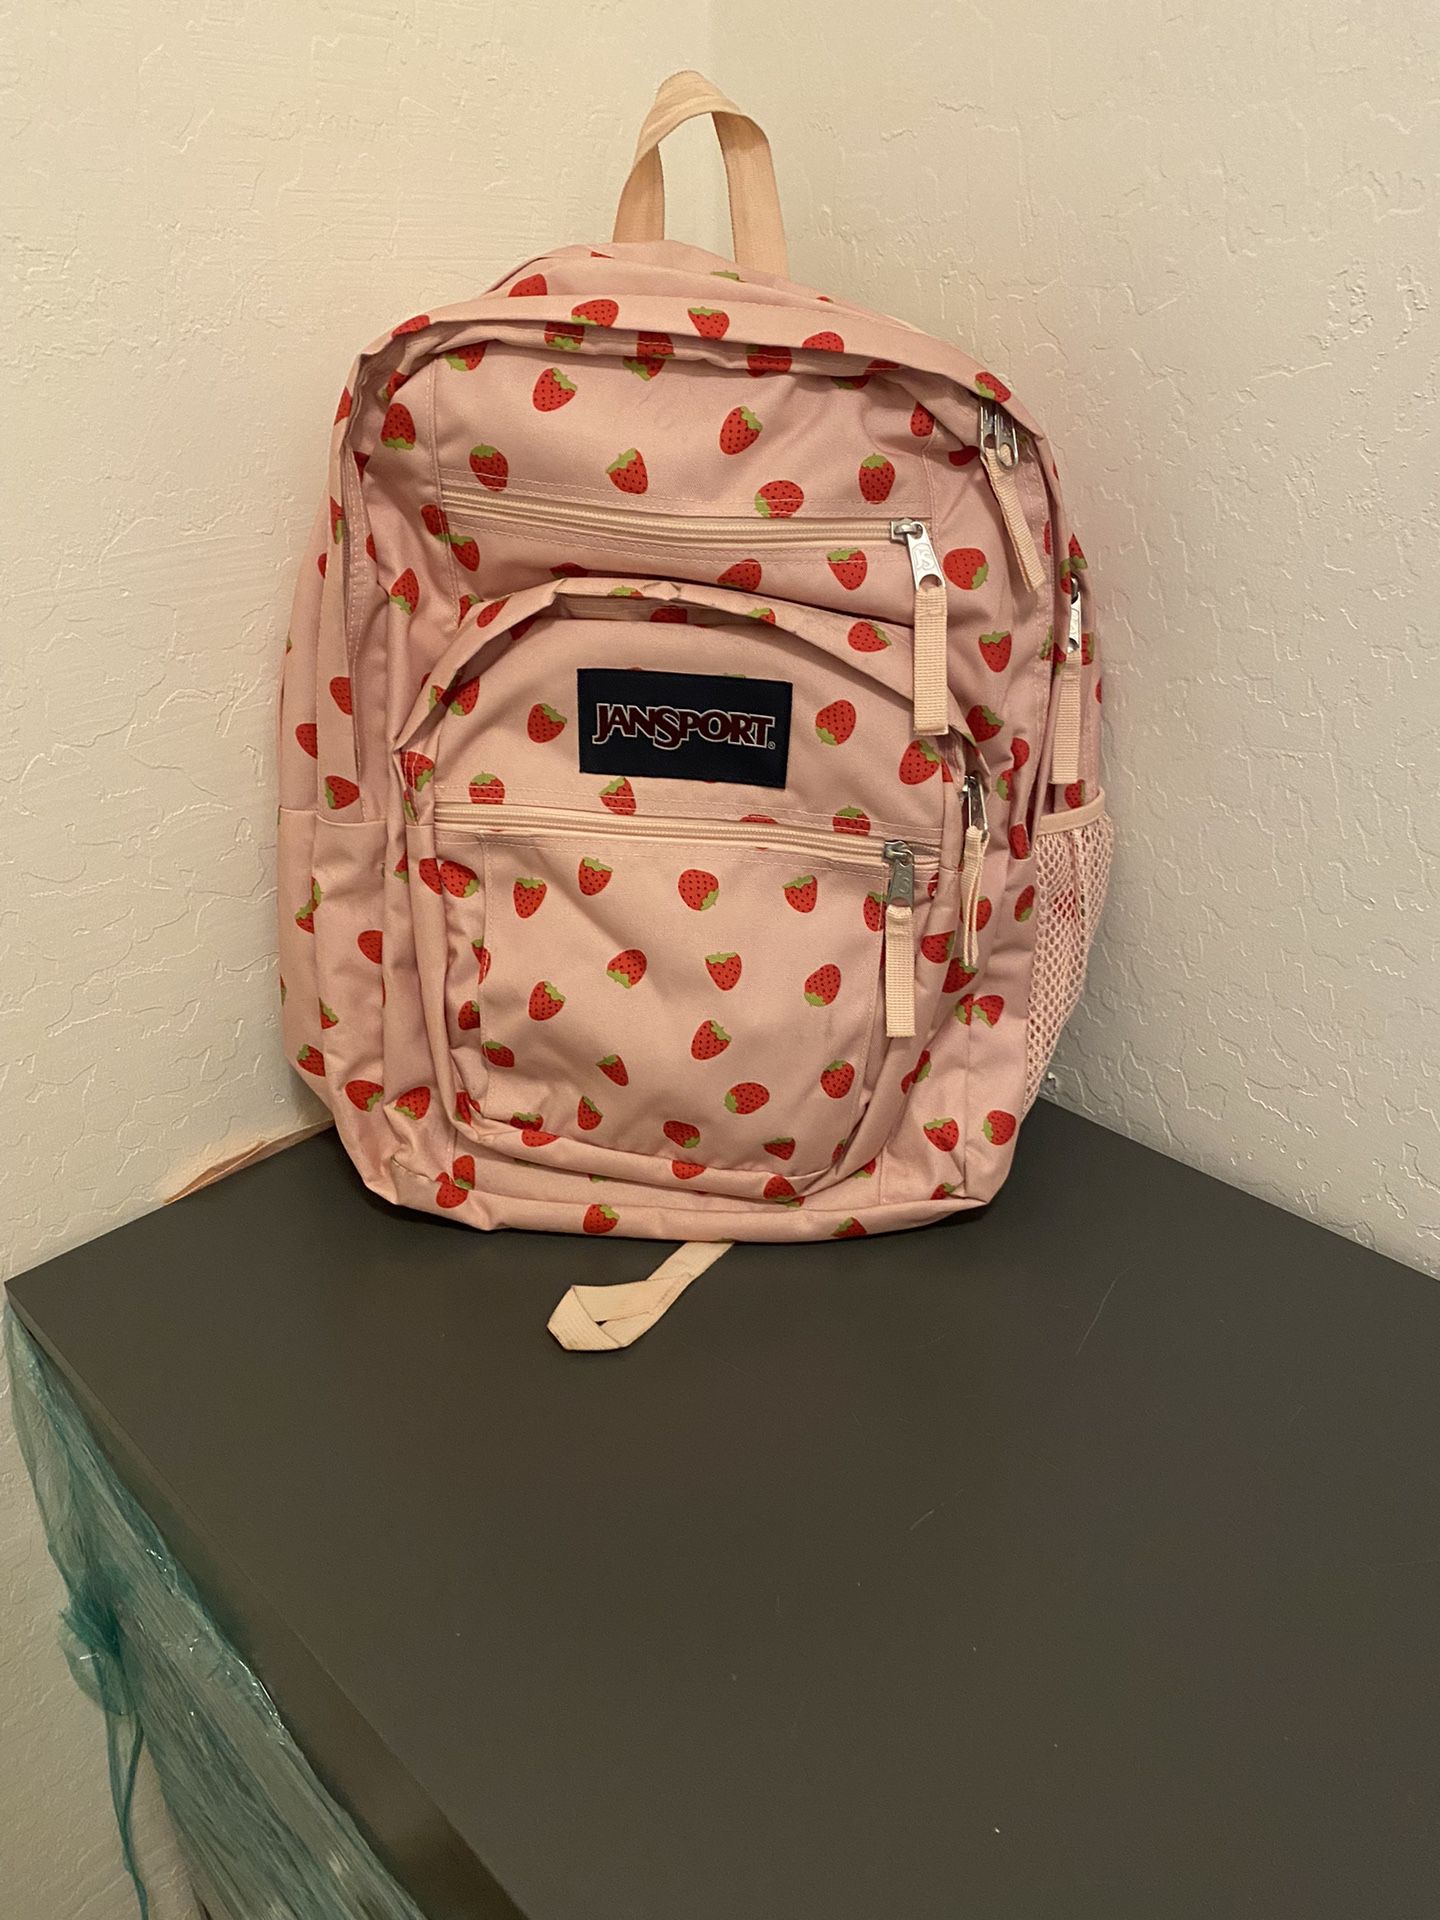 Strawberry Jansport Backpack 